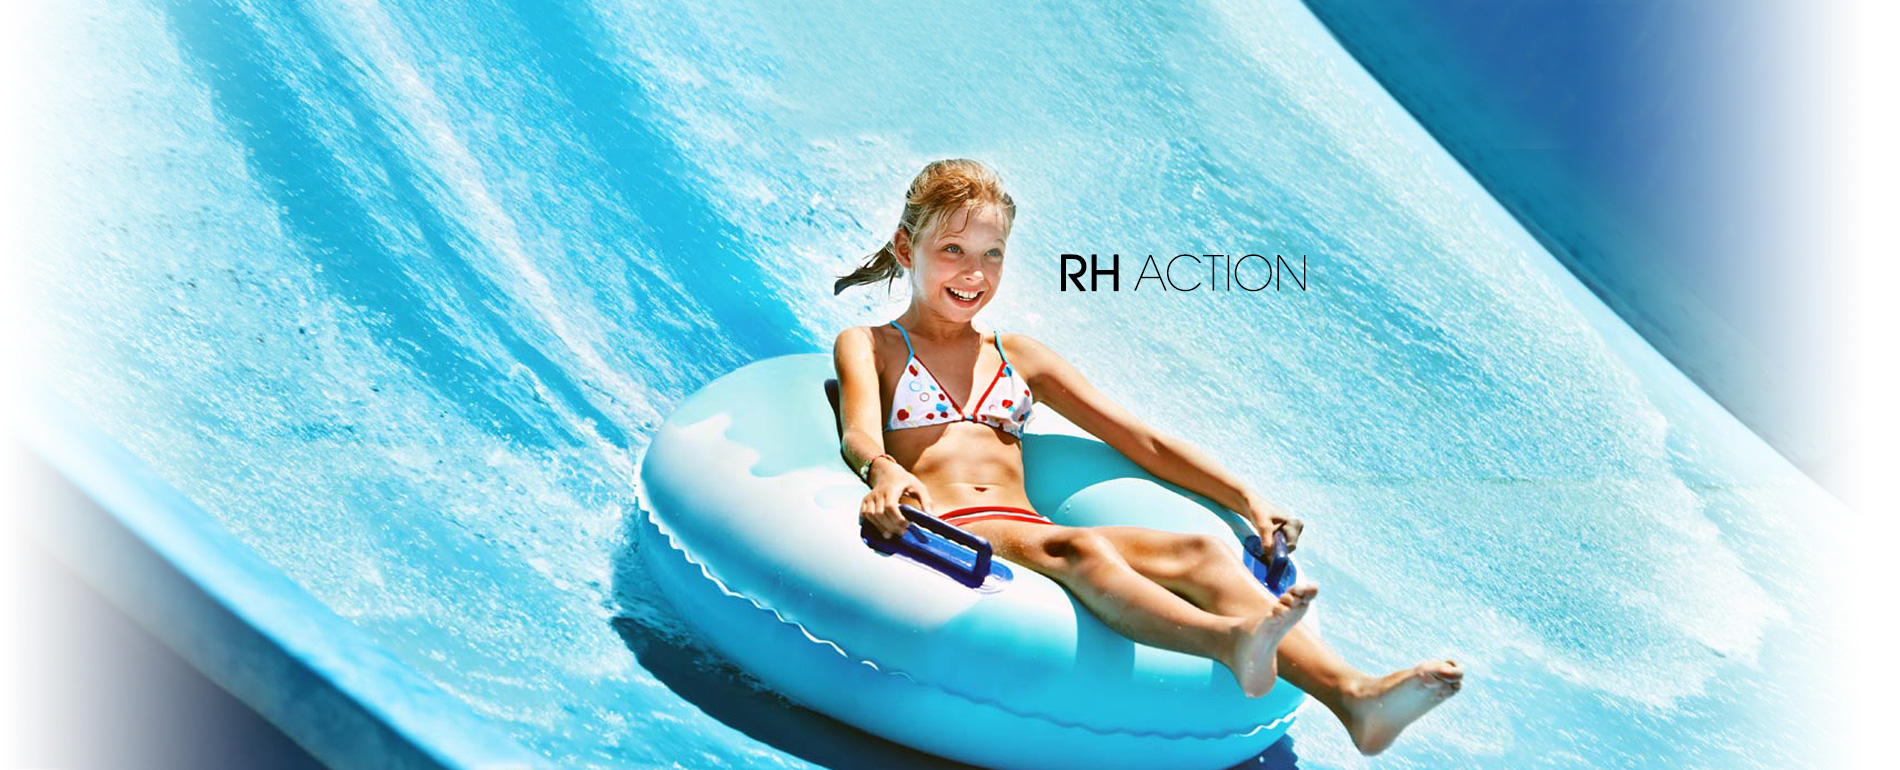 Rh-action